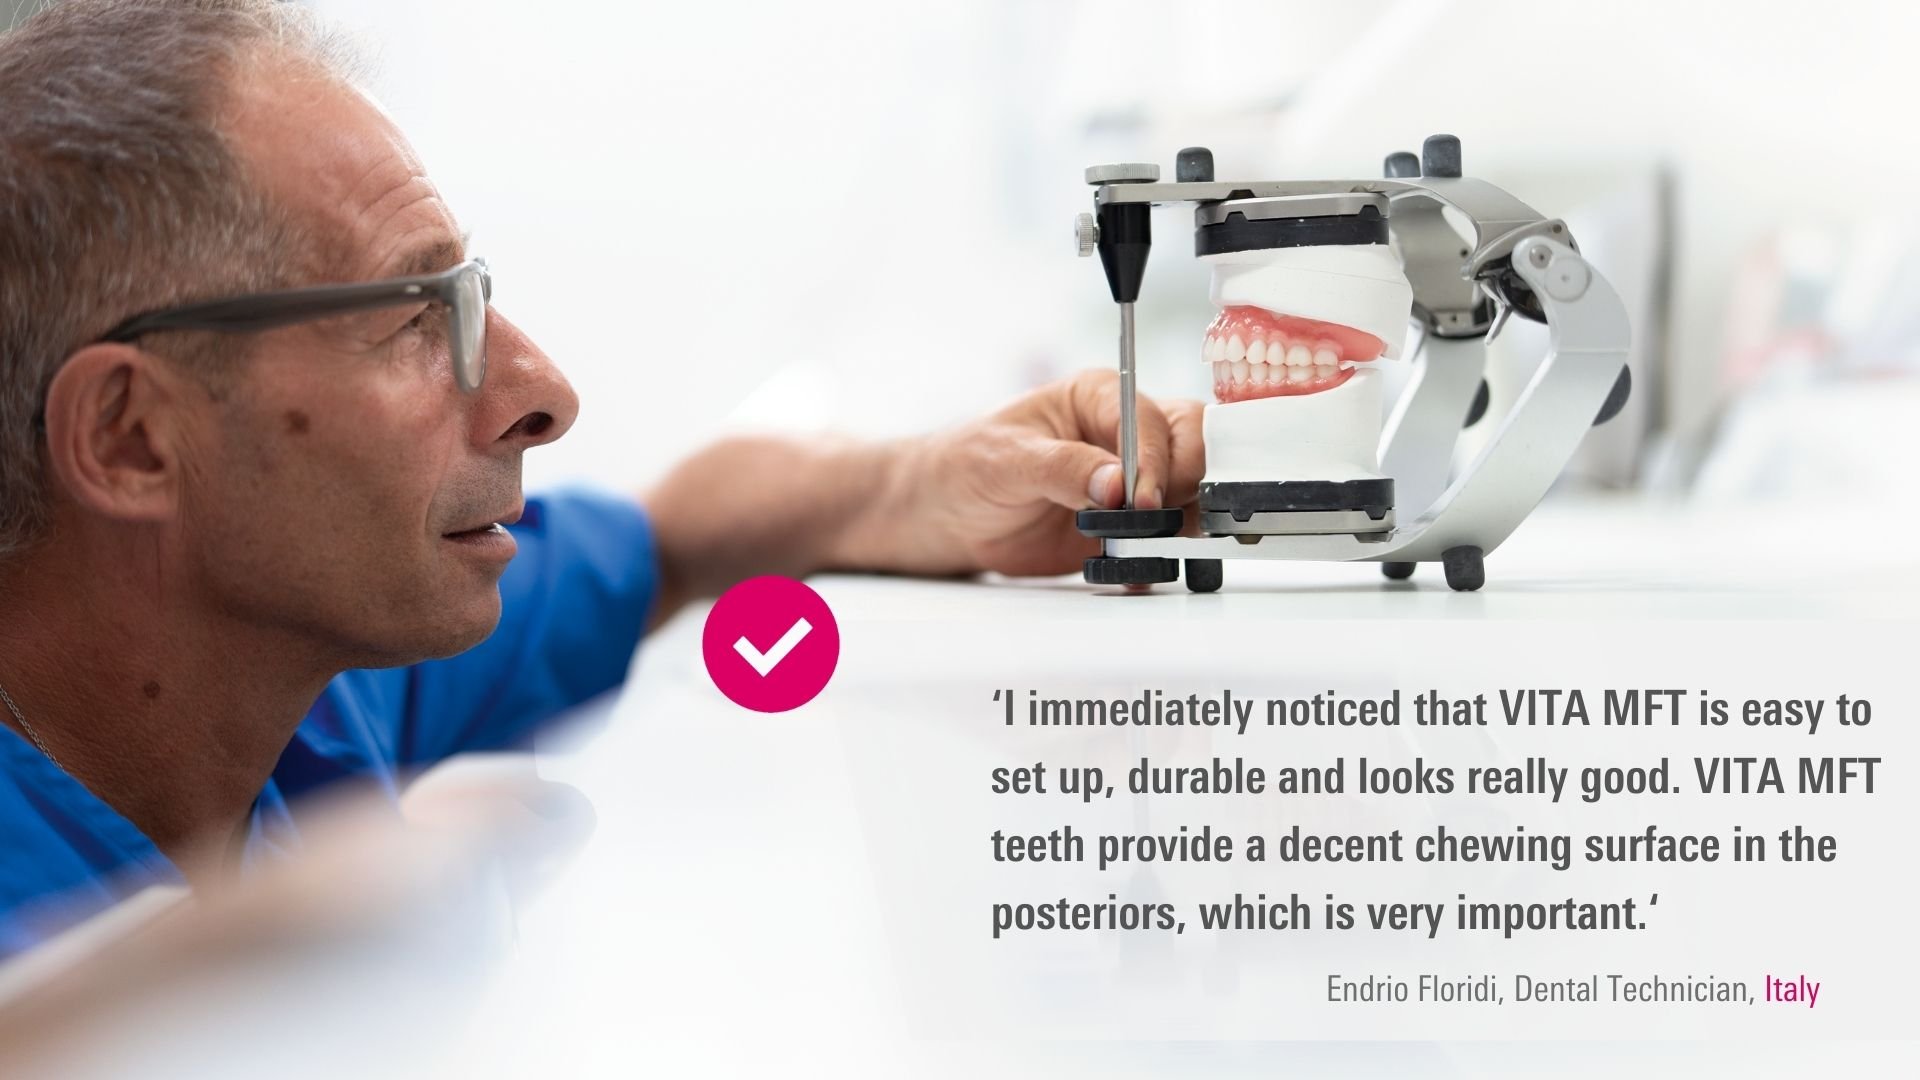 VITA MFT. Endrio Floridi, Dental Technician, Italy